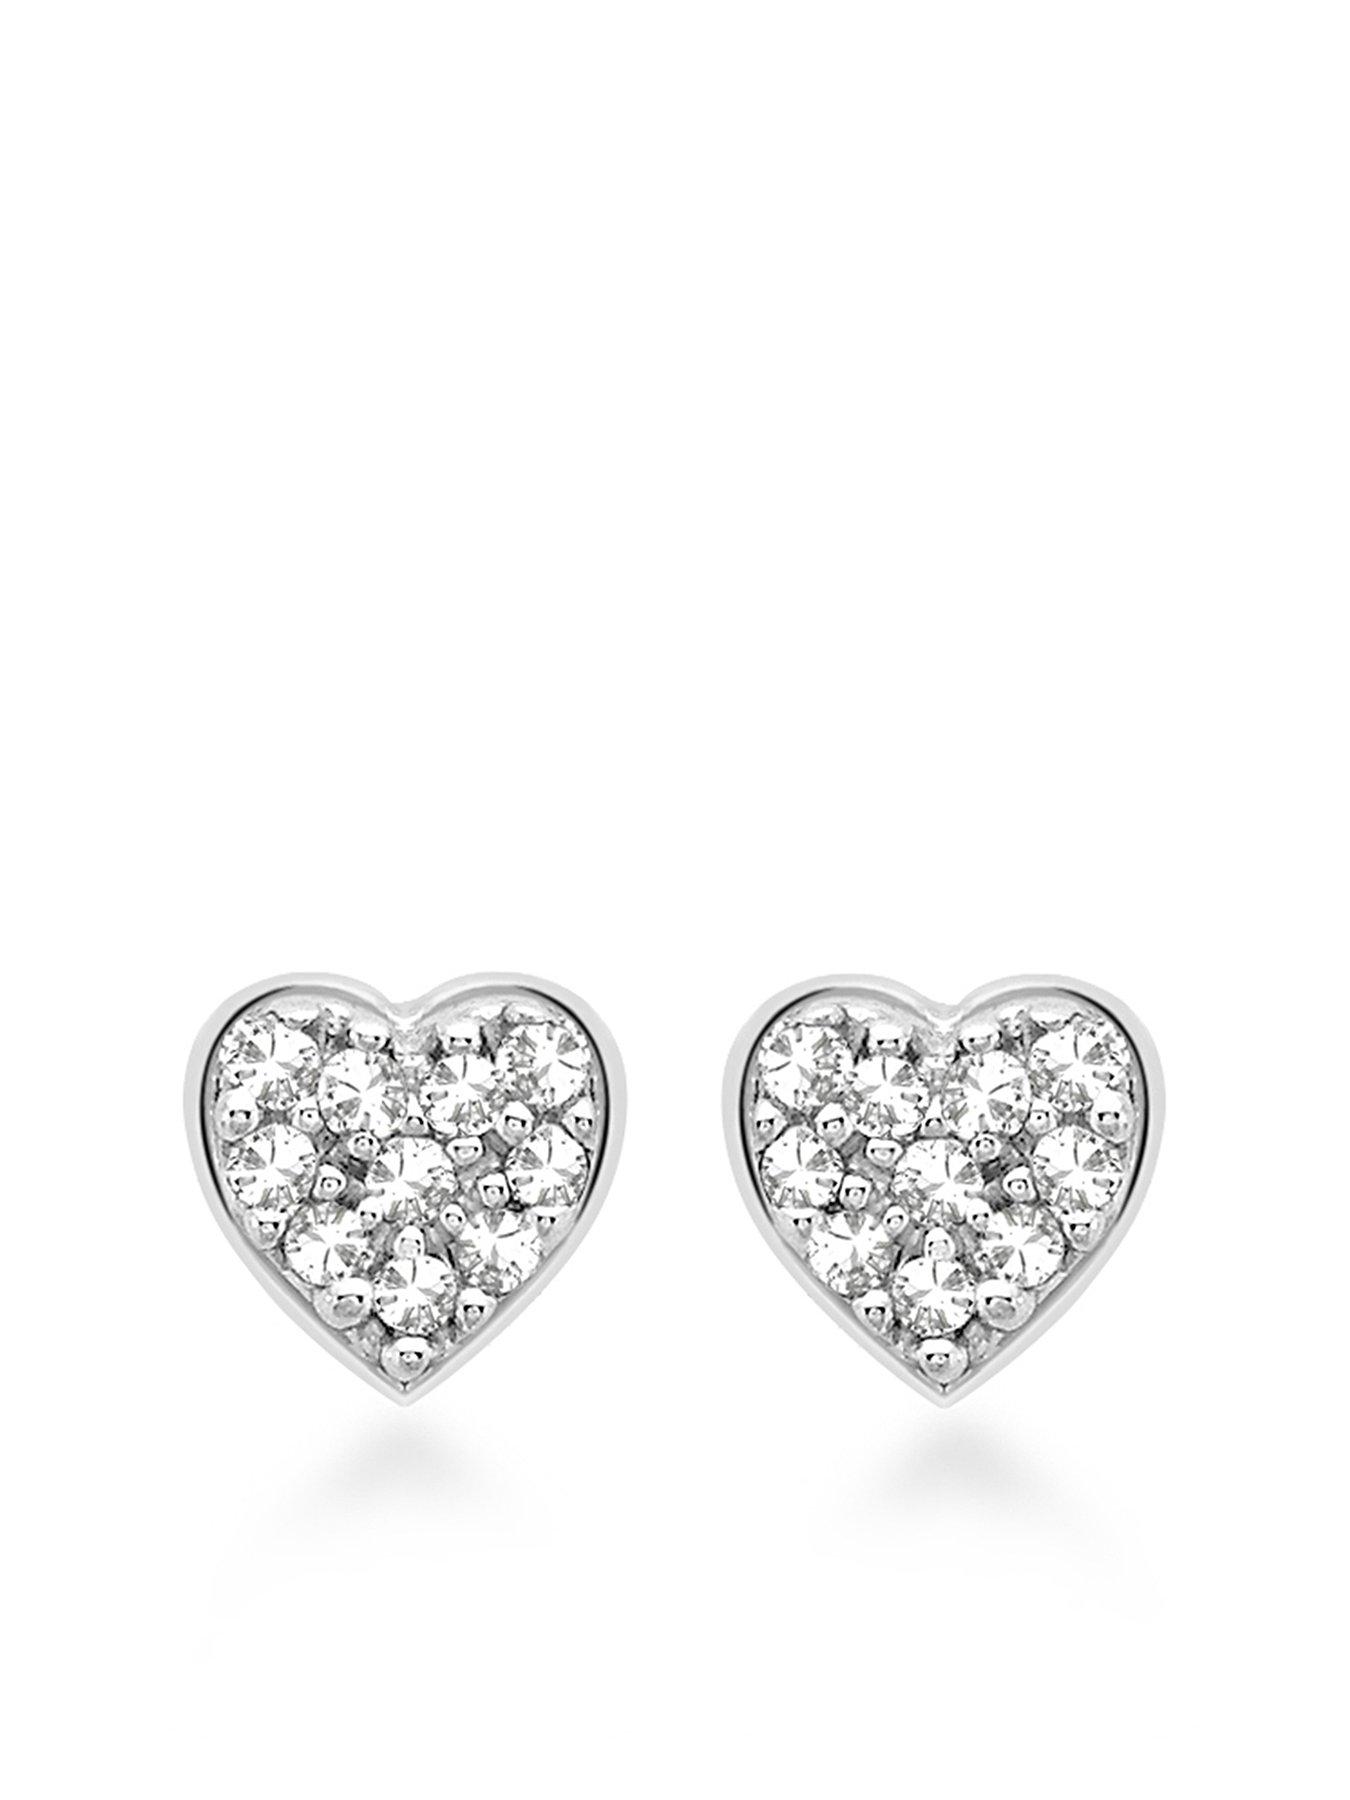  9ct White Gold Pave Set Diamond 4mm Heart Stud Earrings